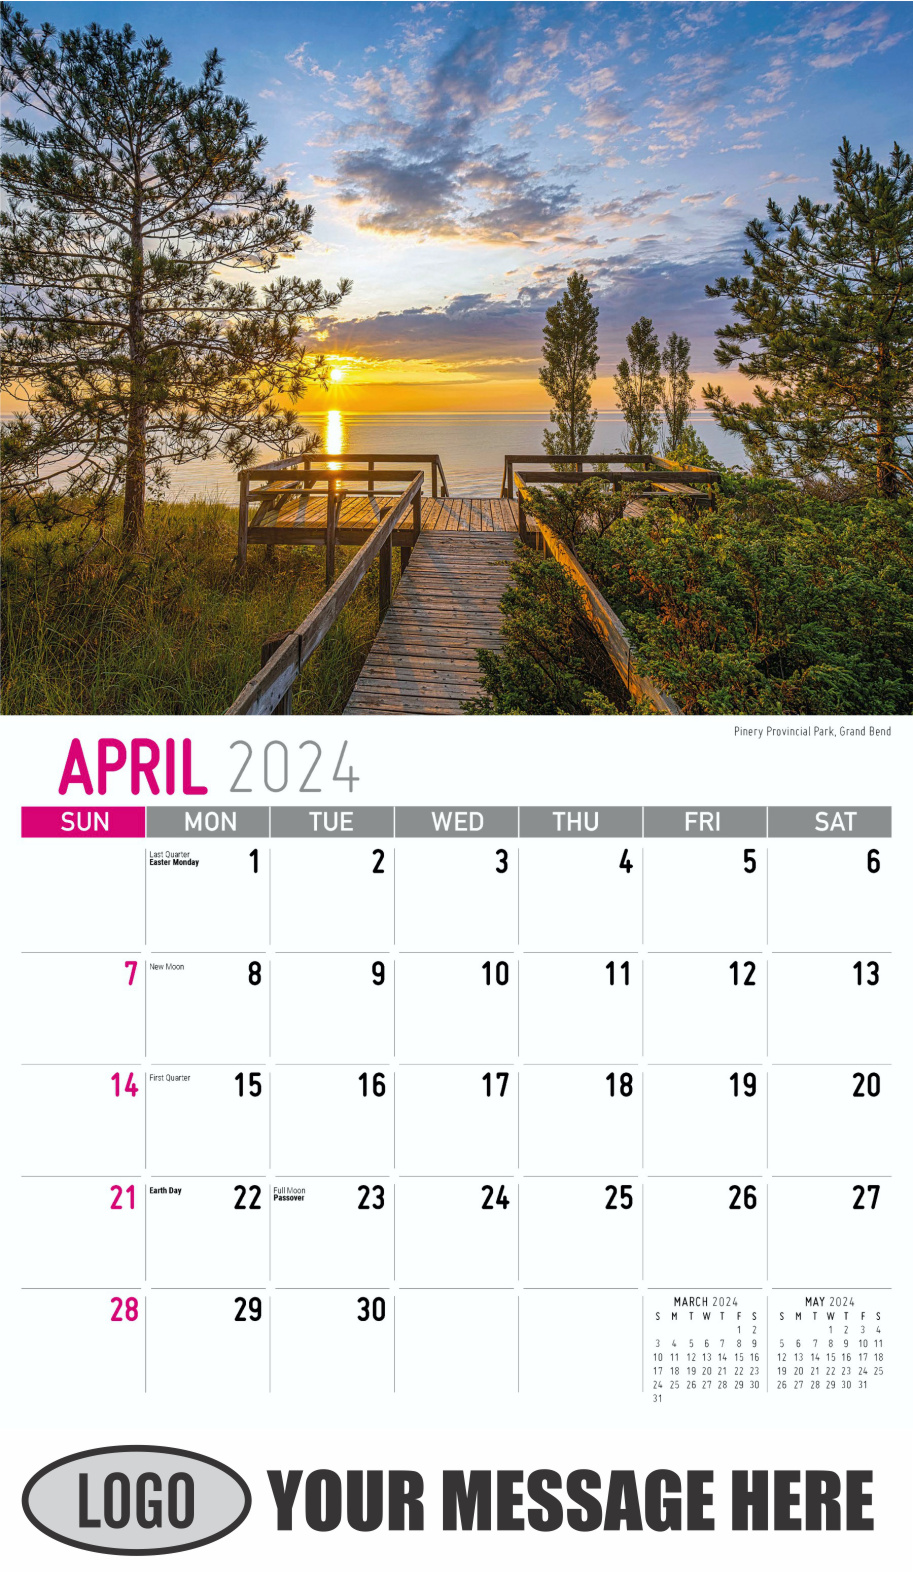 Scenes of Ontario 2024 Business Promo Wall Calendar - April